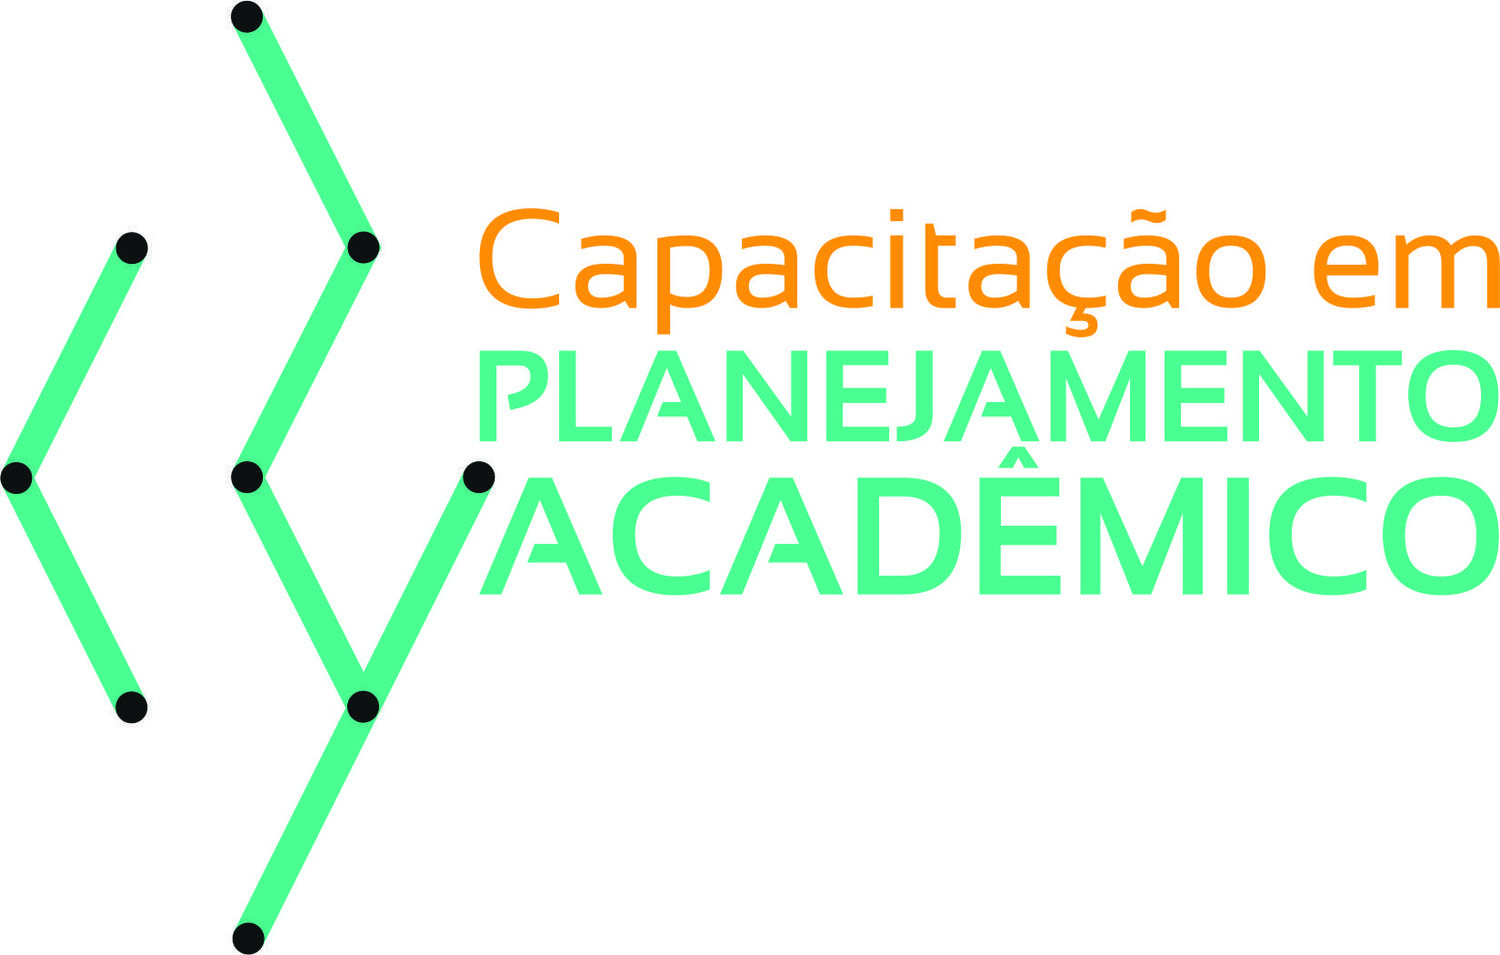 Logo Capa